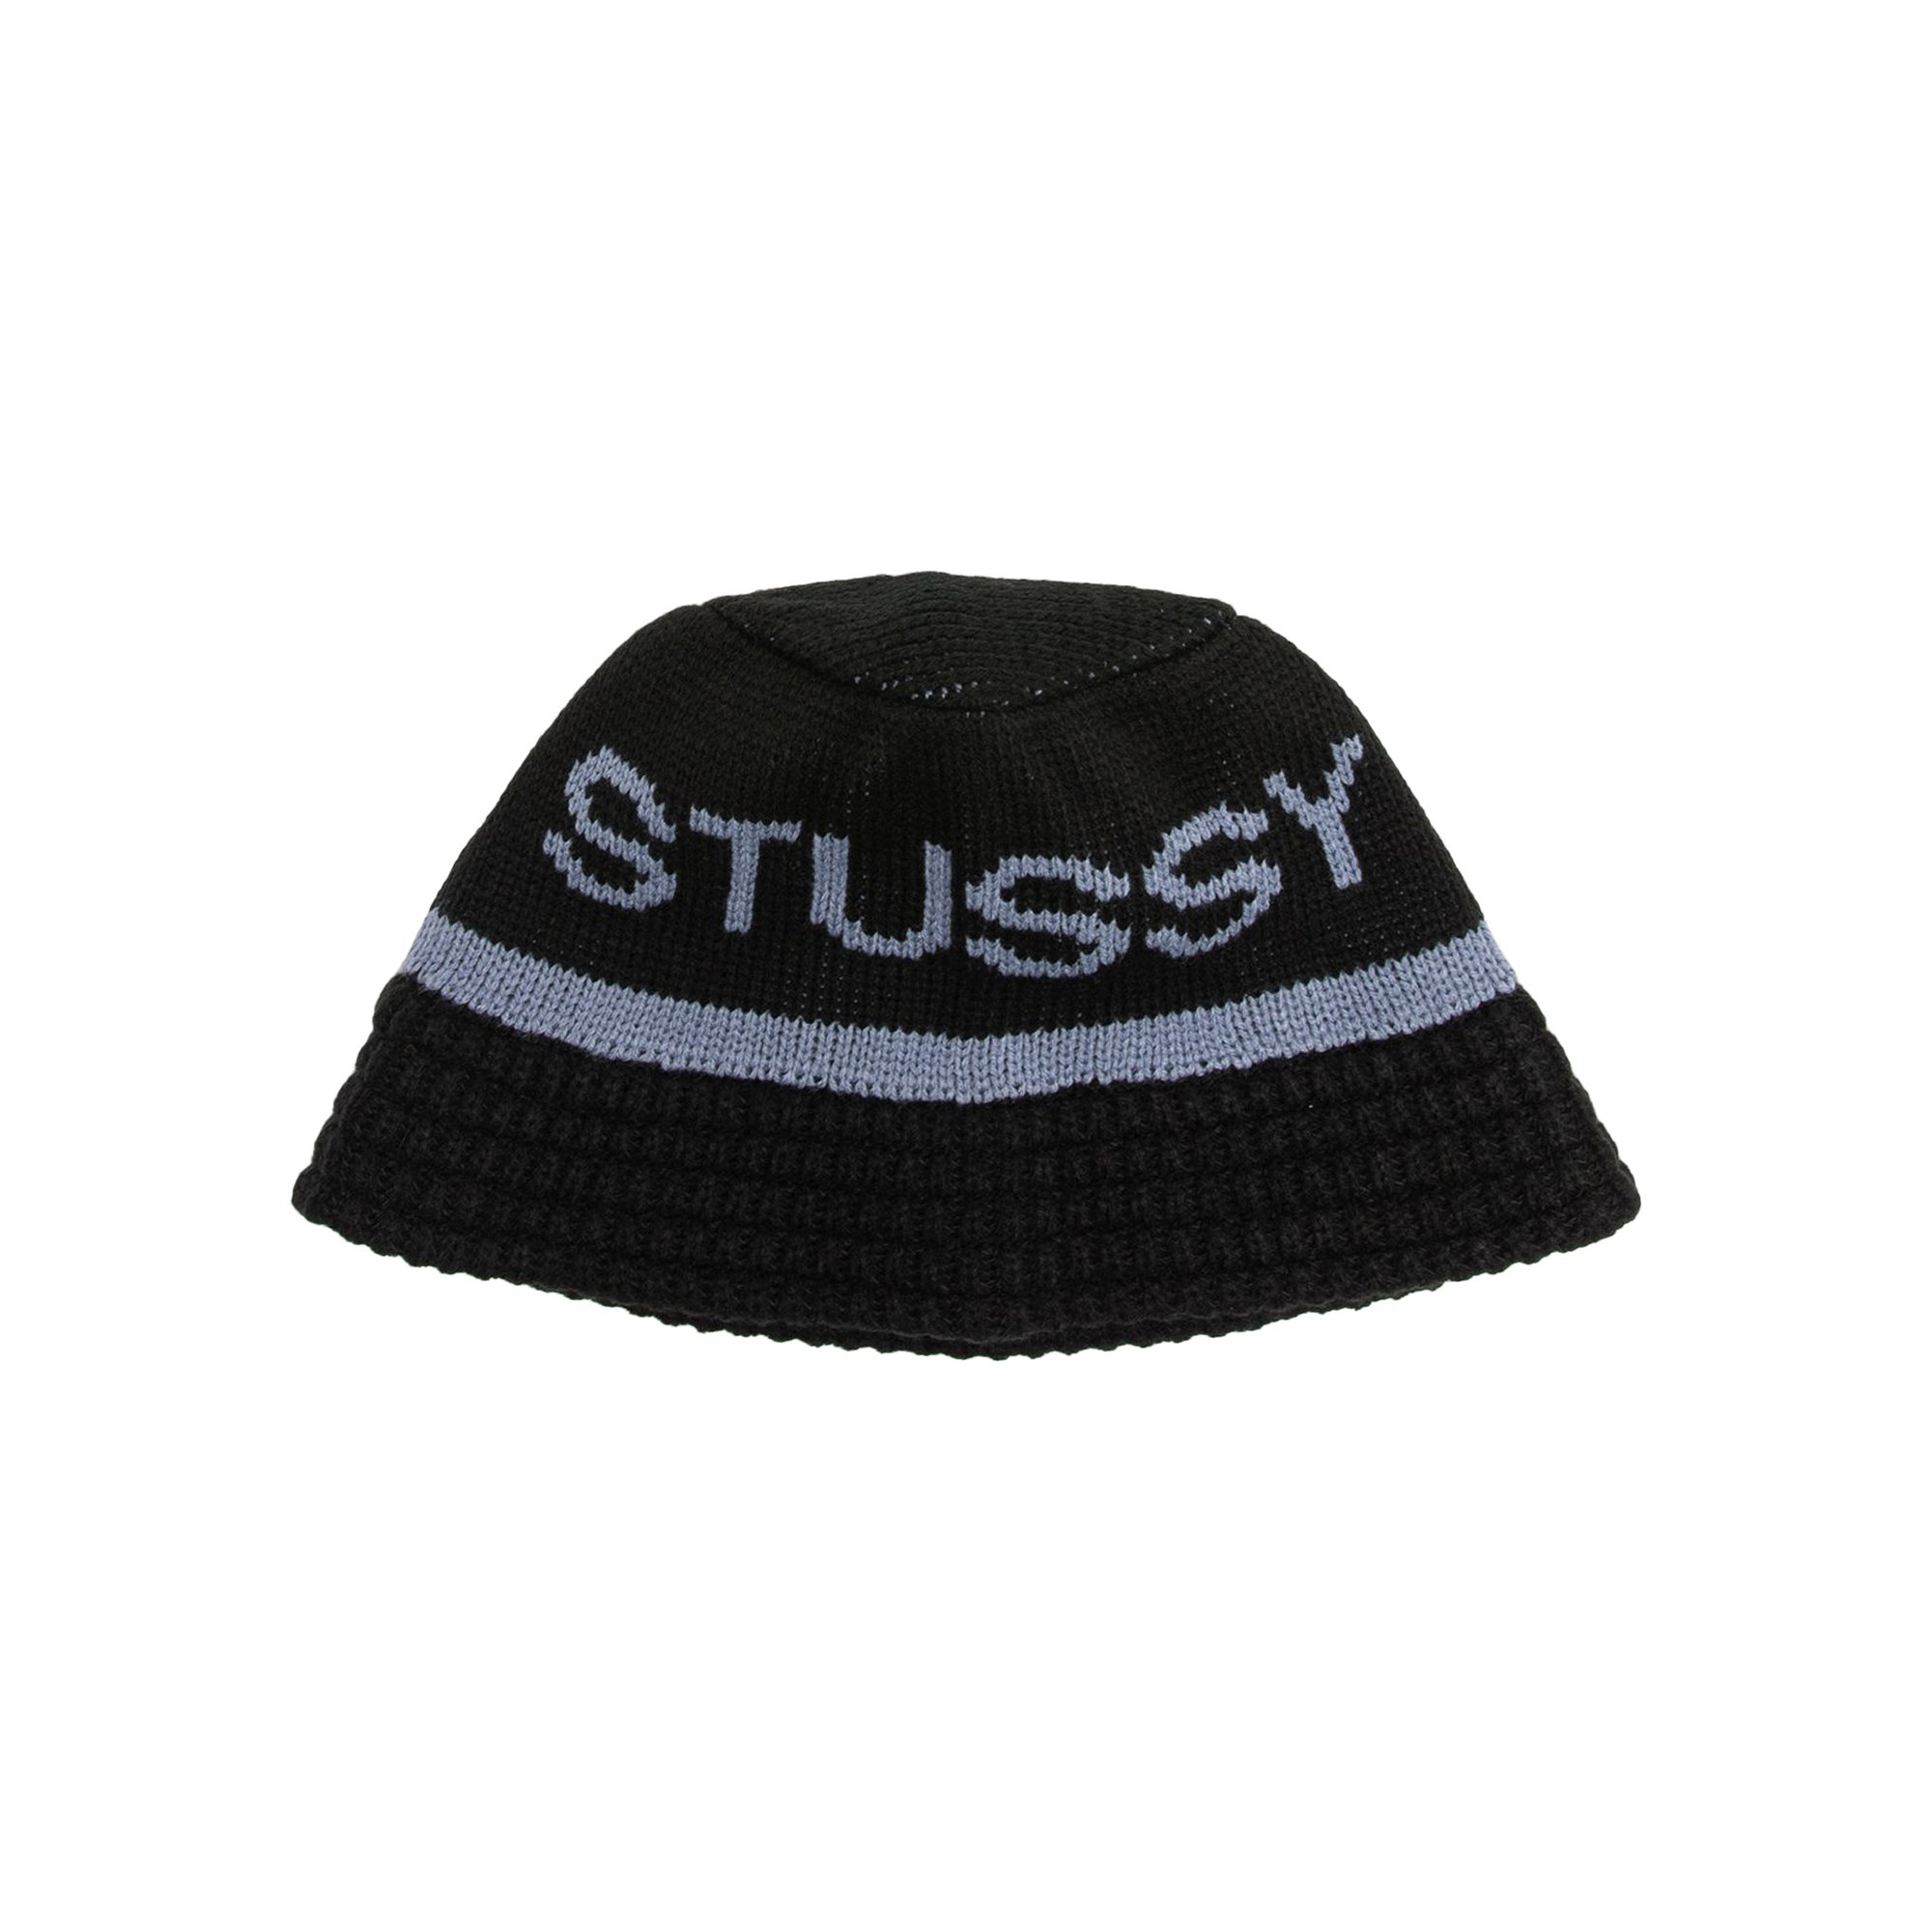 Buy Stussy Jacquard Knit Bucket Hat 'Black' - 1321095 BLAC | GOAT